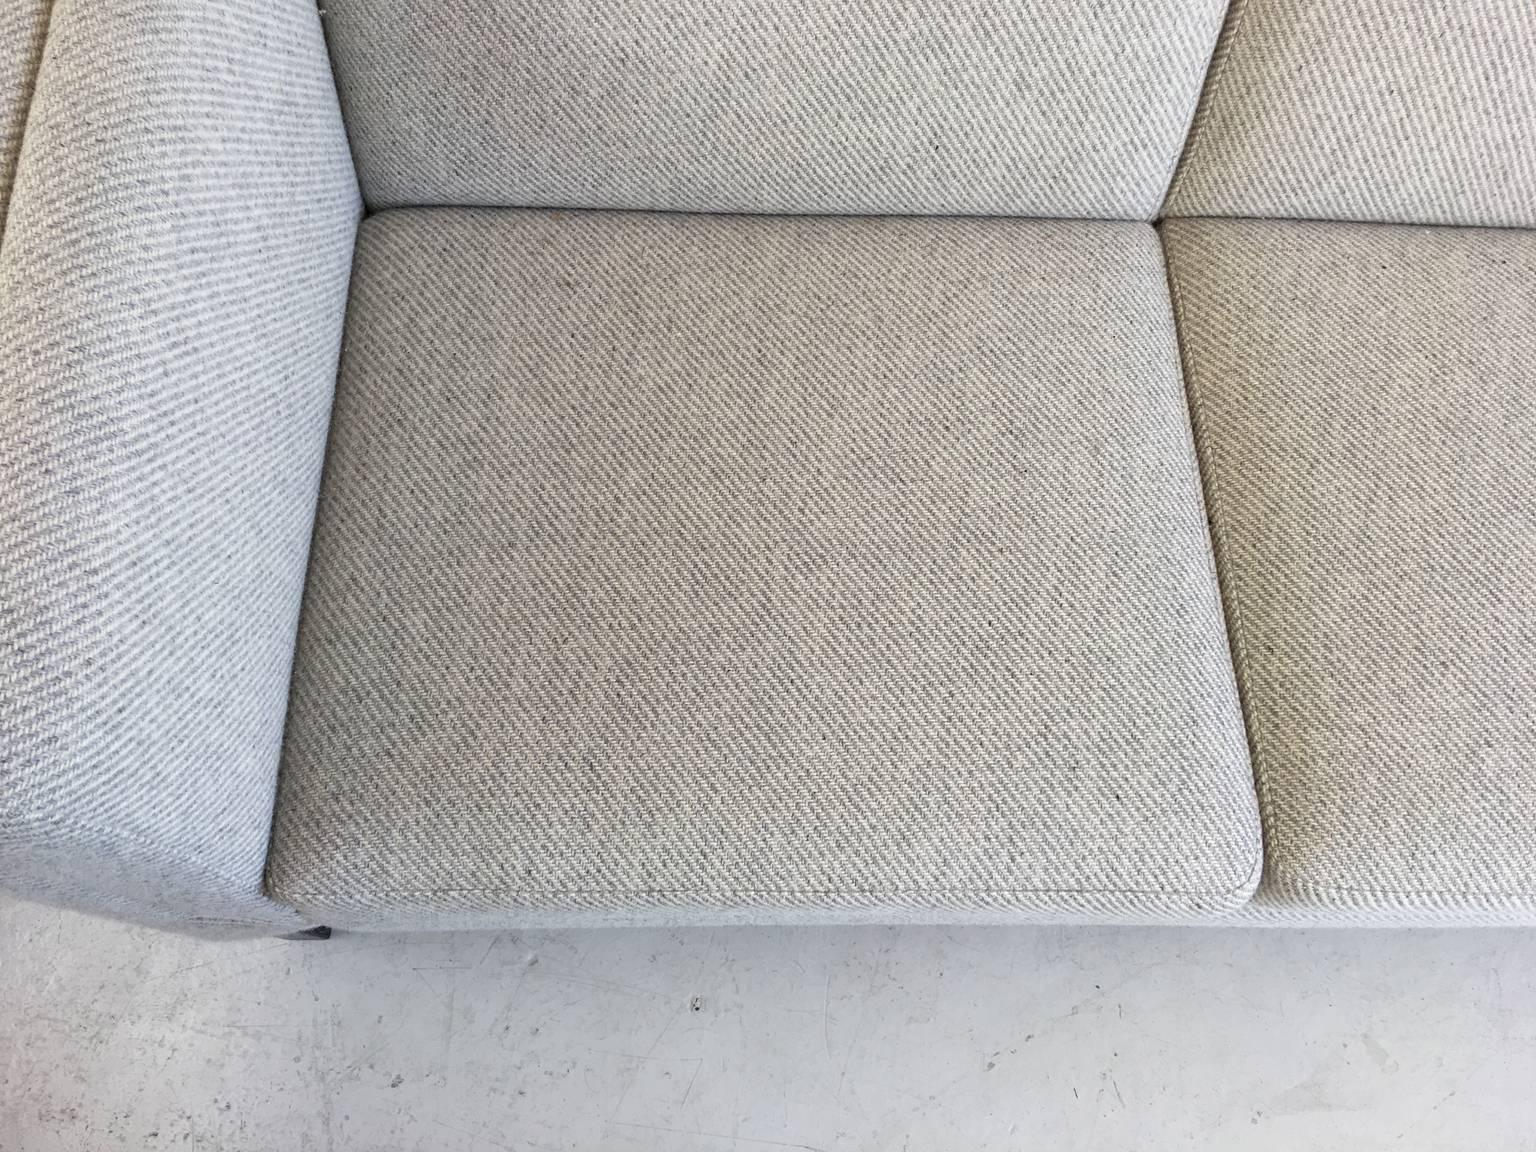 Late 20th Century 1970s Danish Mid-Century Sofa with Original Grey Woollen Upholstery